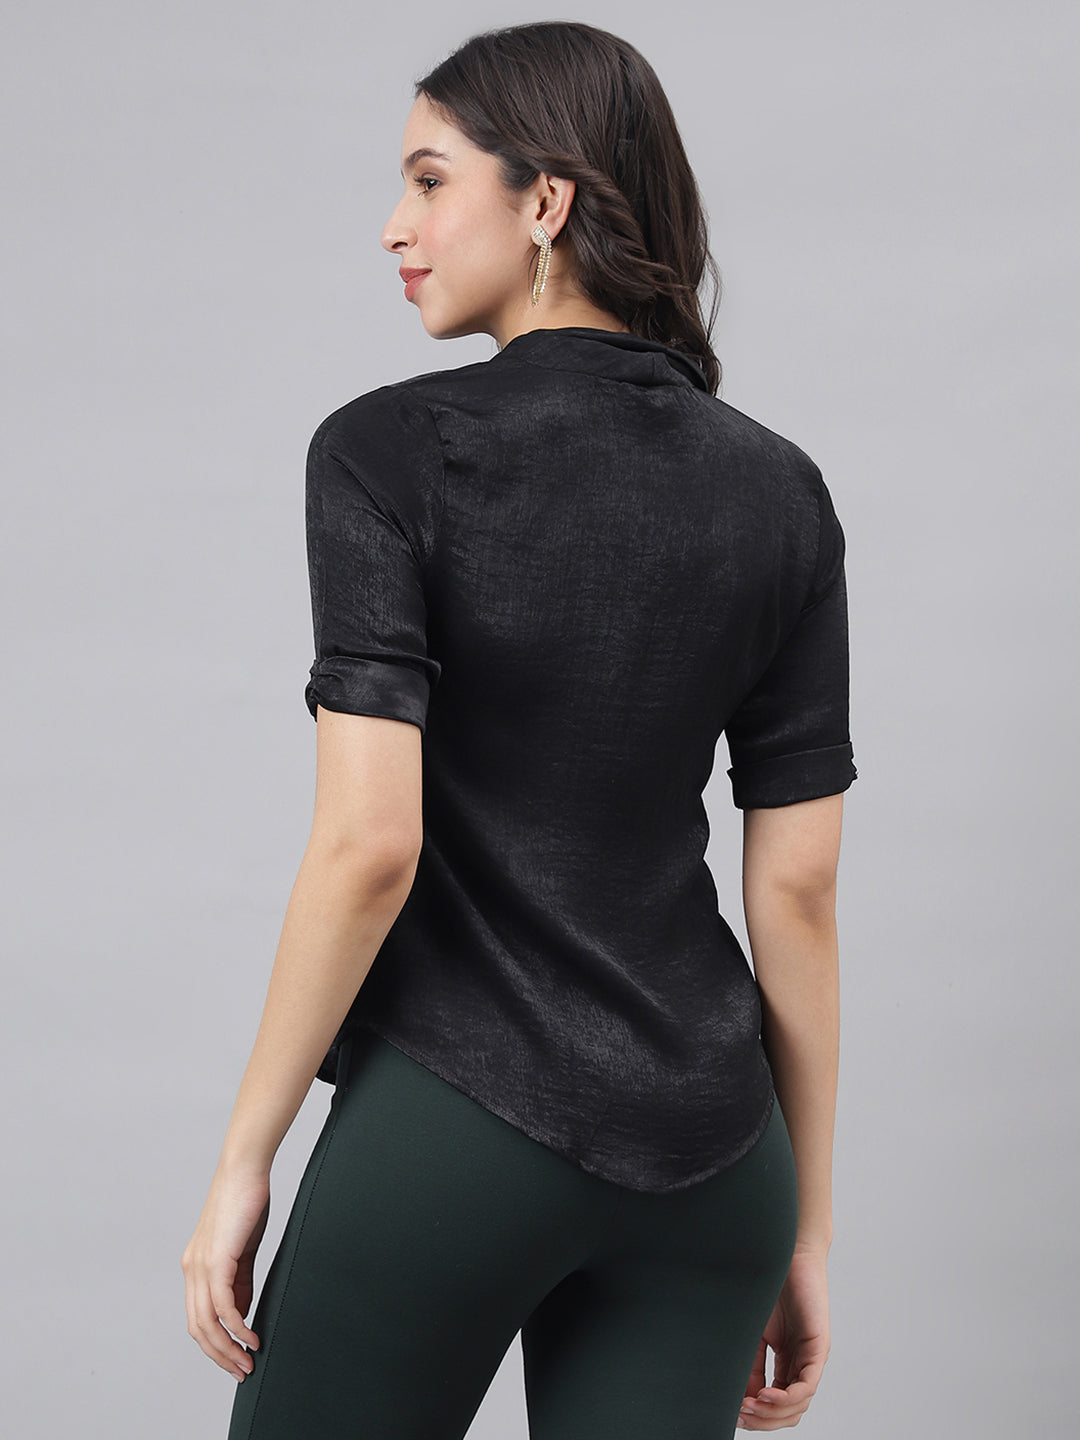 Black Half Sleeve V-Neck Women Solid Top